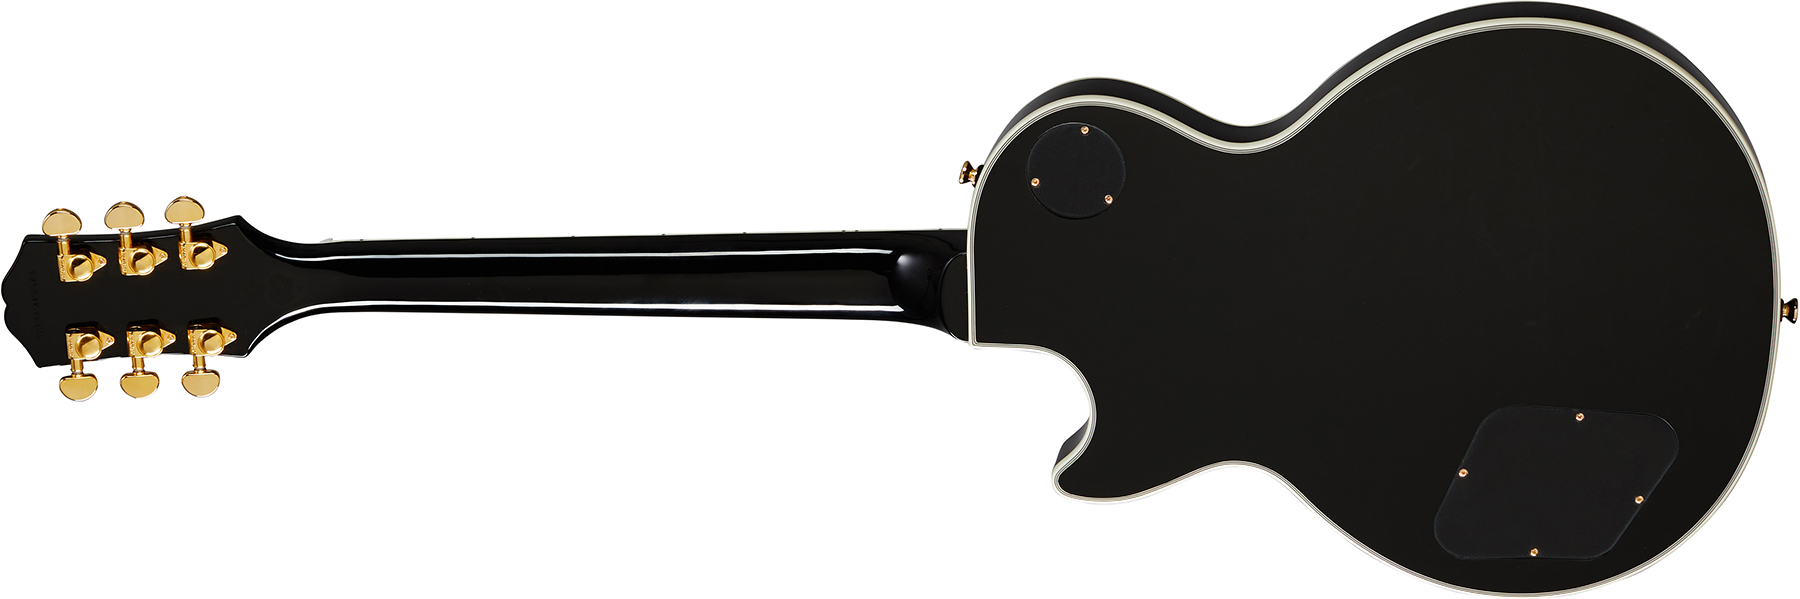 Epiphone Les Paul Custom 2h Ht Eb - Ebony - Guitarra eléctrica de corte único. - Variation 1